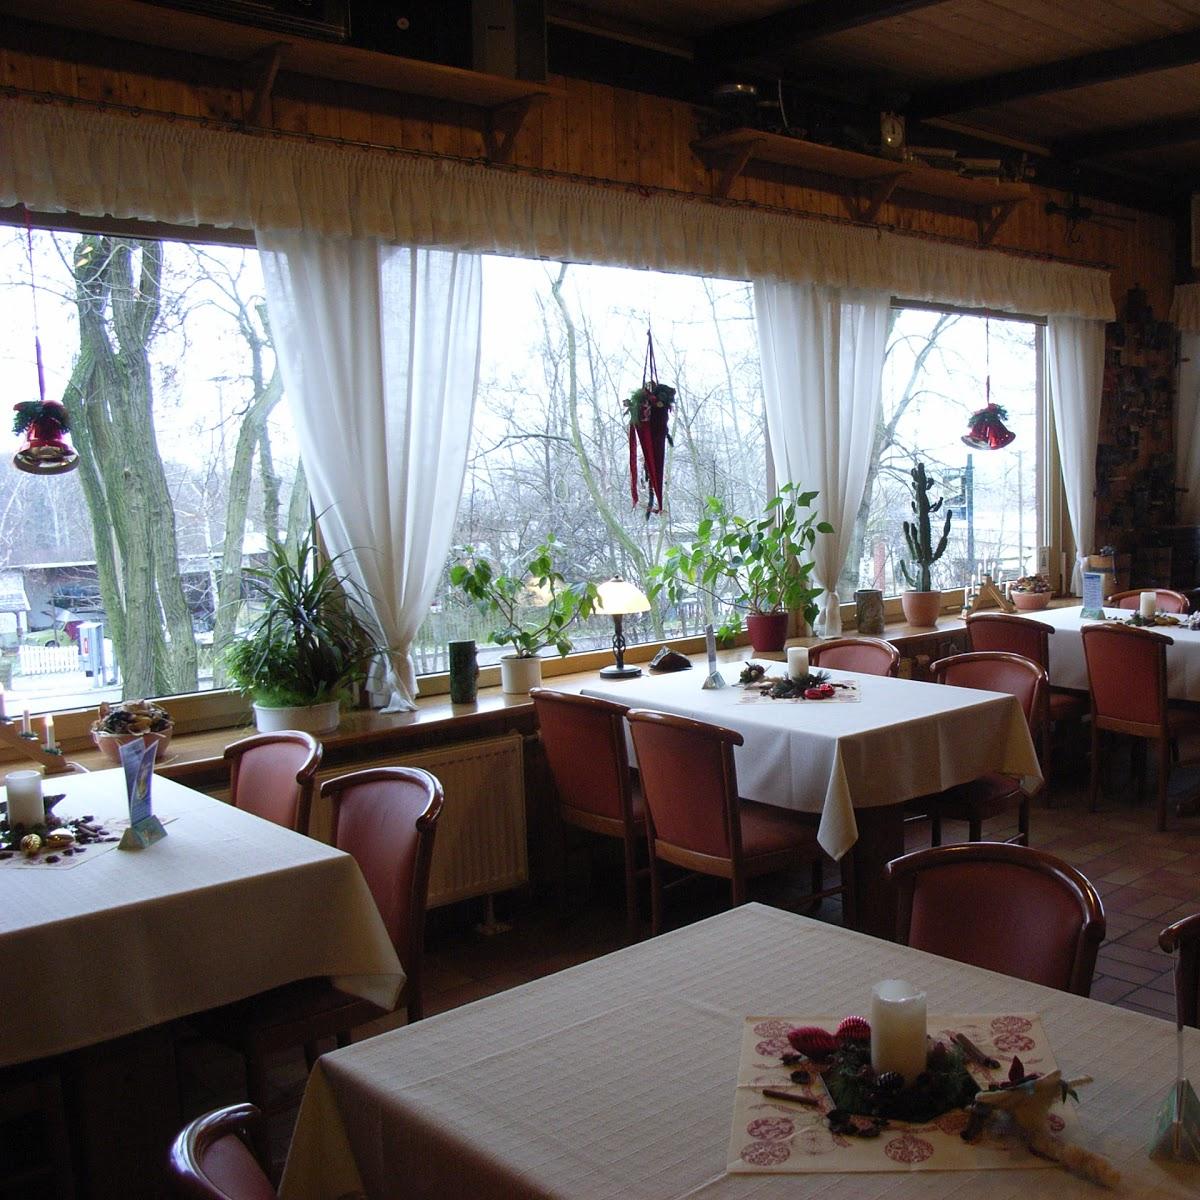 Restaurant "Restaurant & Café  Pavillon  " in Petersberg